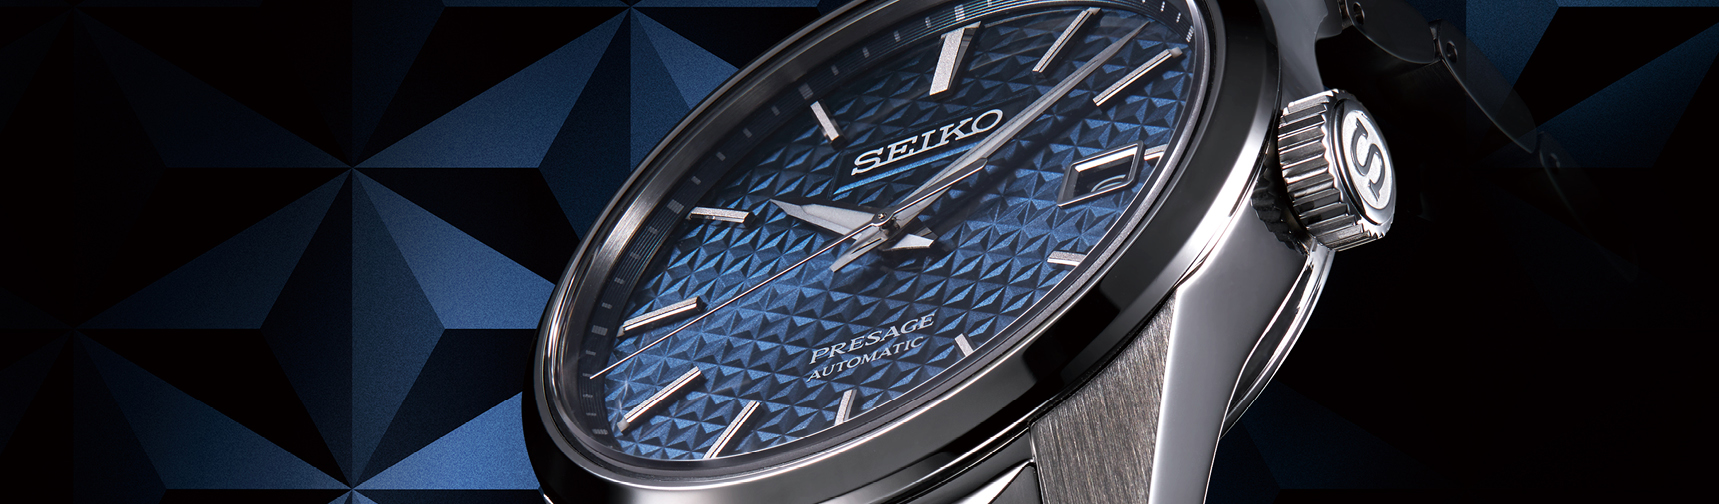 Binnenshuis uitlaat stoeprand Seiko Automatic horloges - Official Online Shop - Seiko.nl